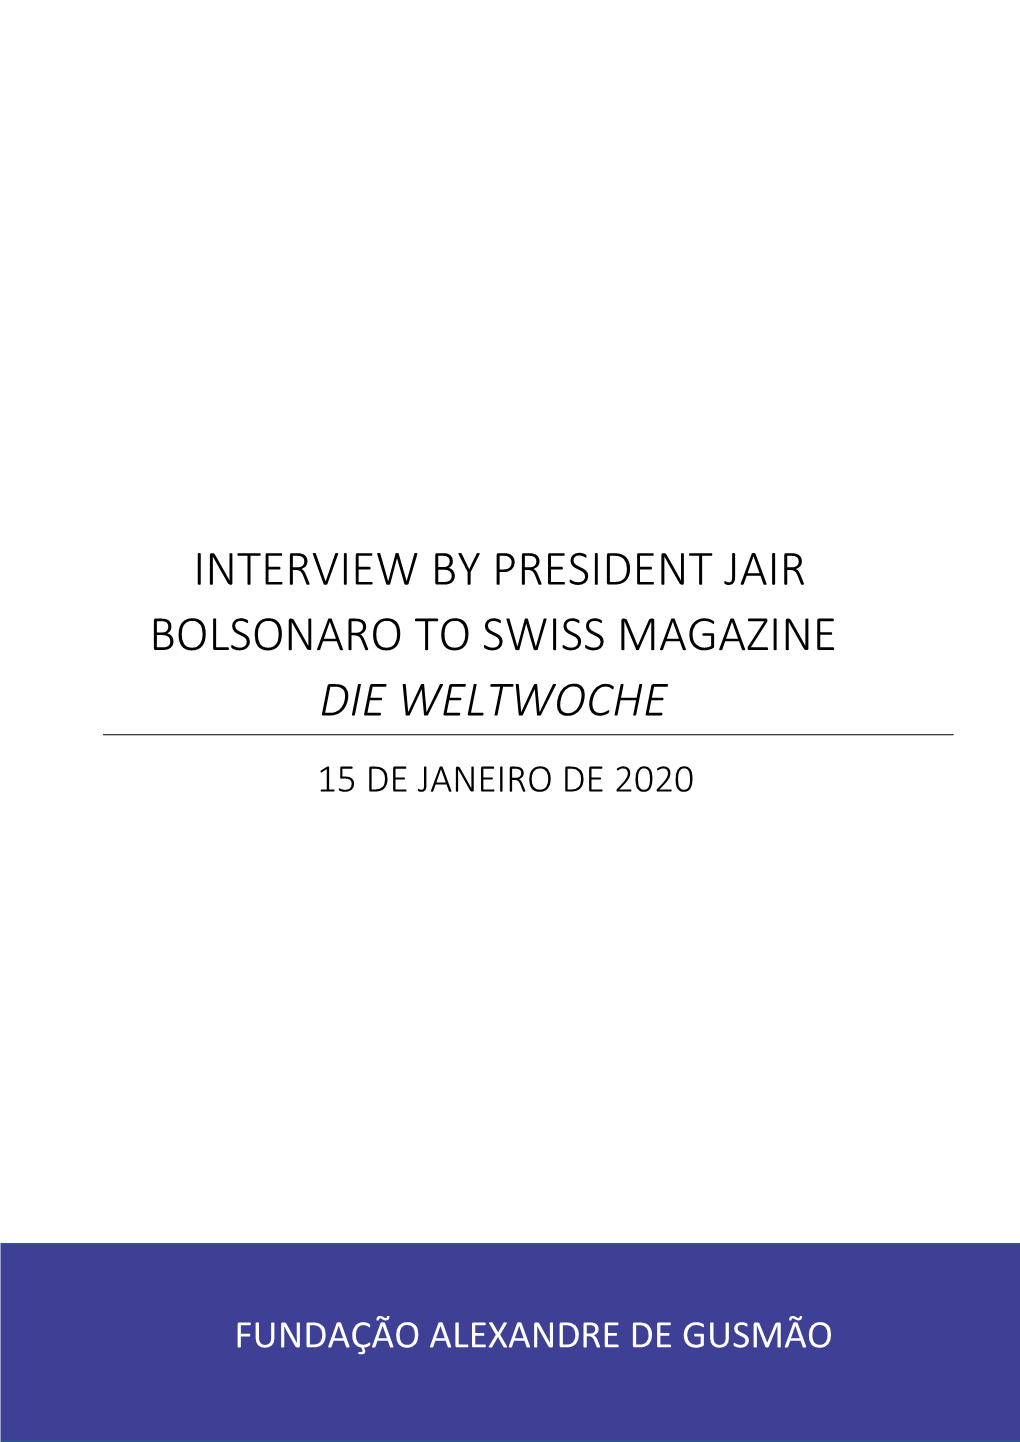 Interview by President Jair Bolsonaro to Swiss Magazine Die Weltwoche 15 De Janeiro De 2020